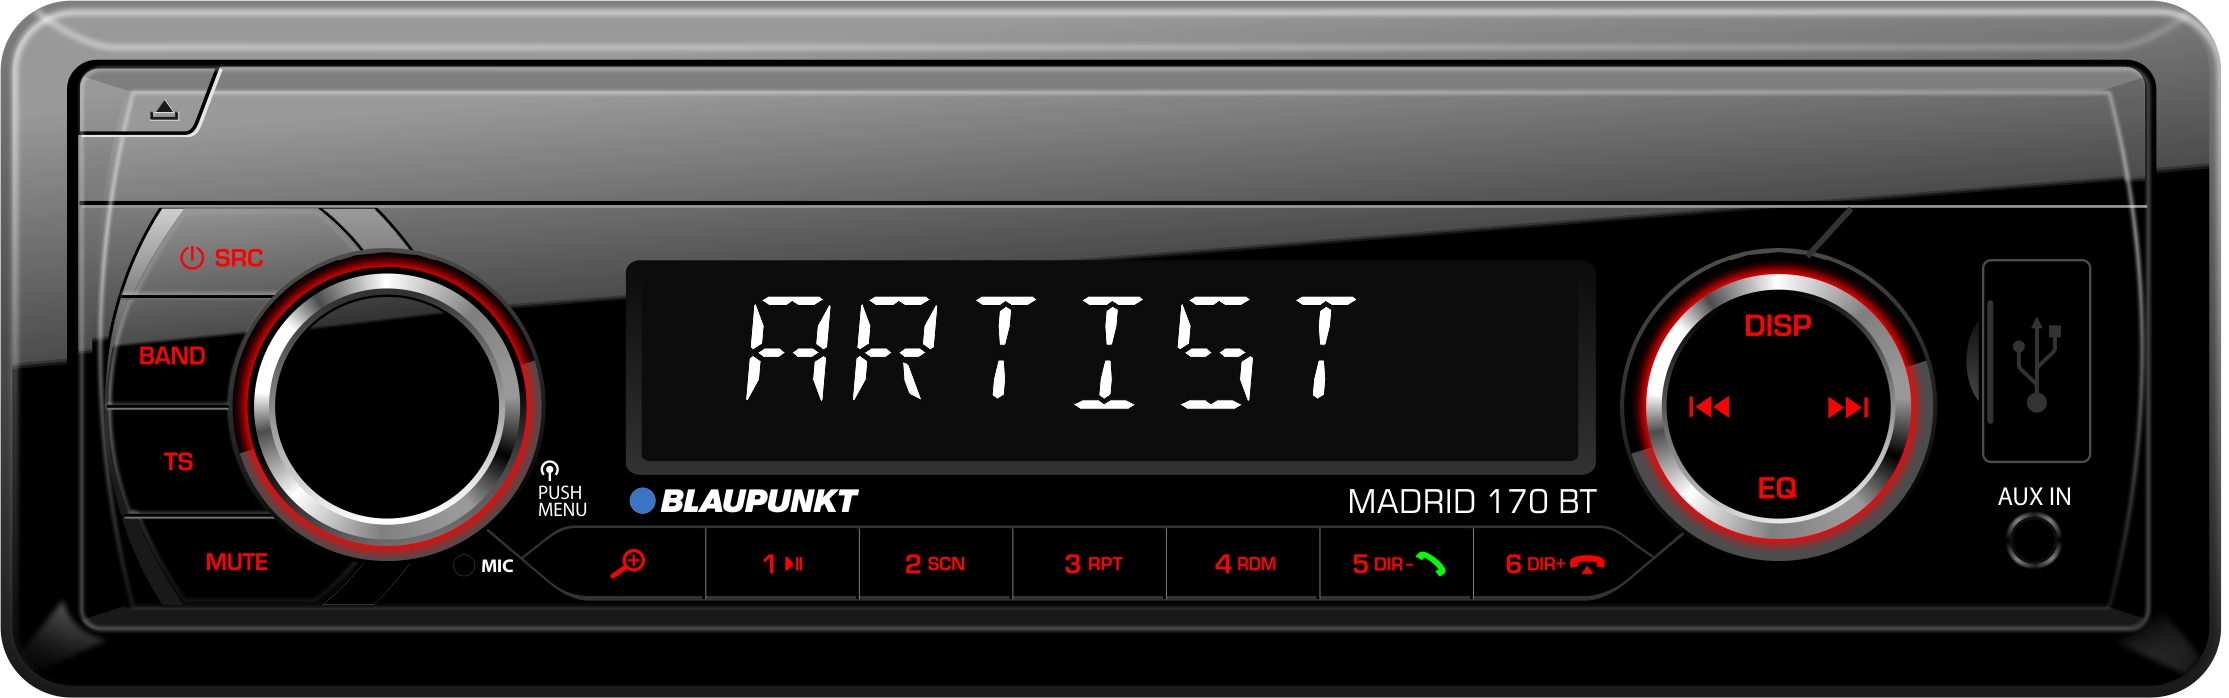 Radio-USB Madrid BT (EU) (+0,60)